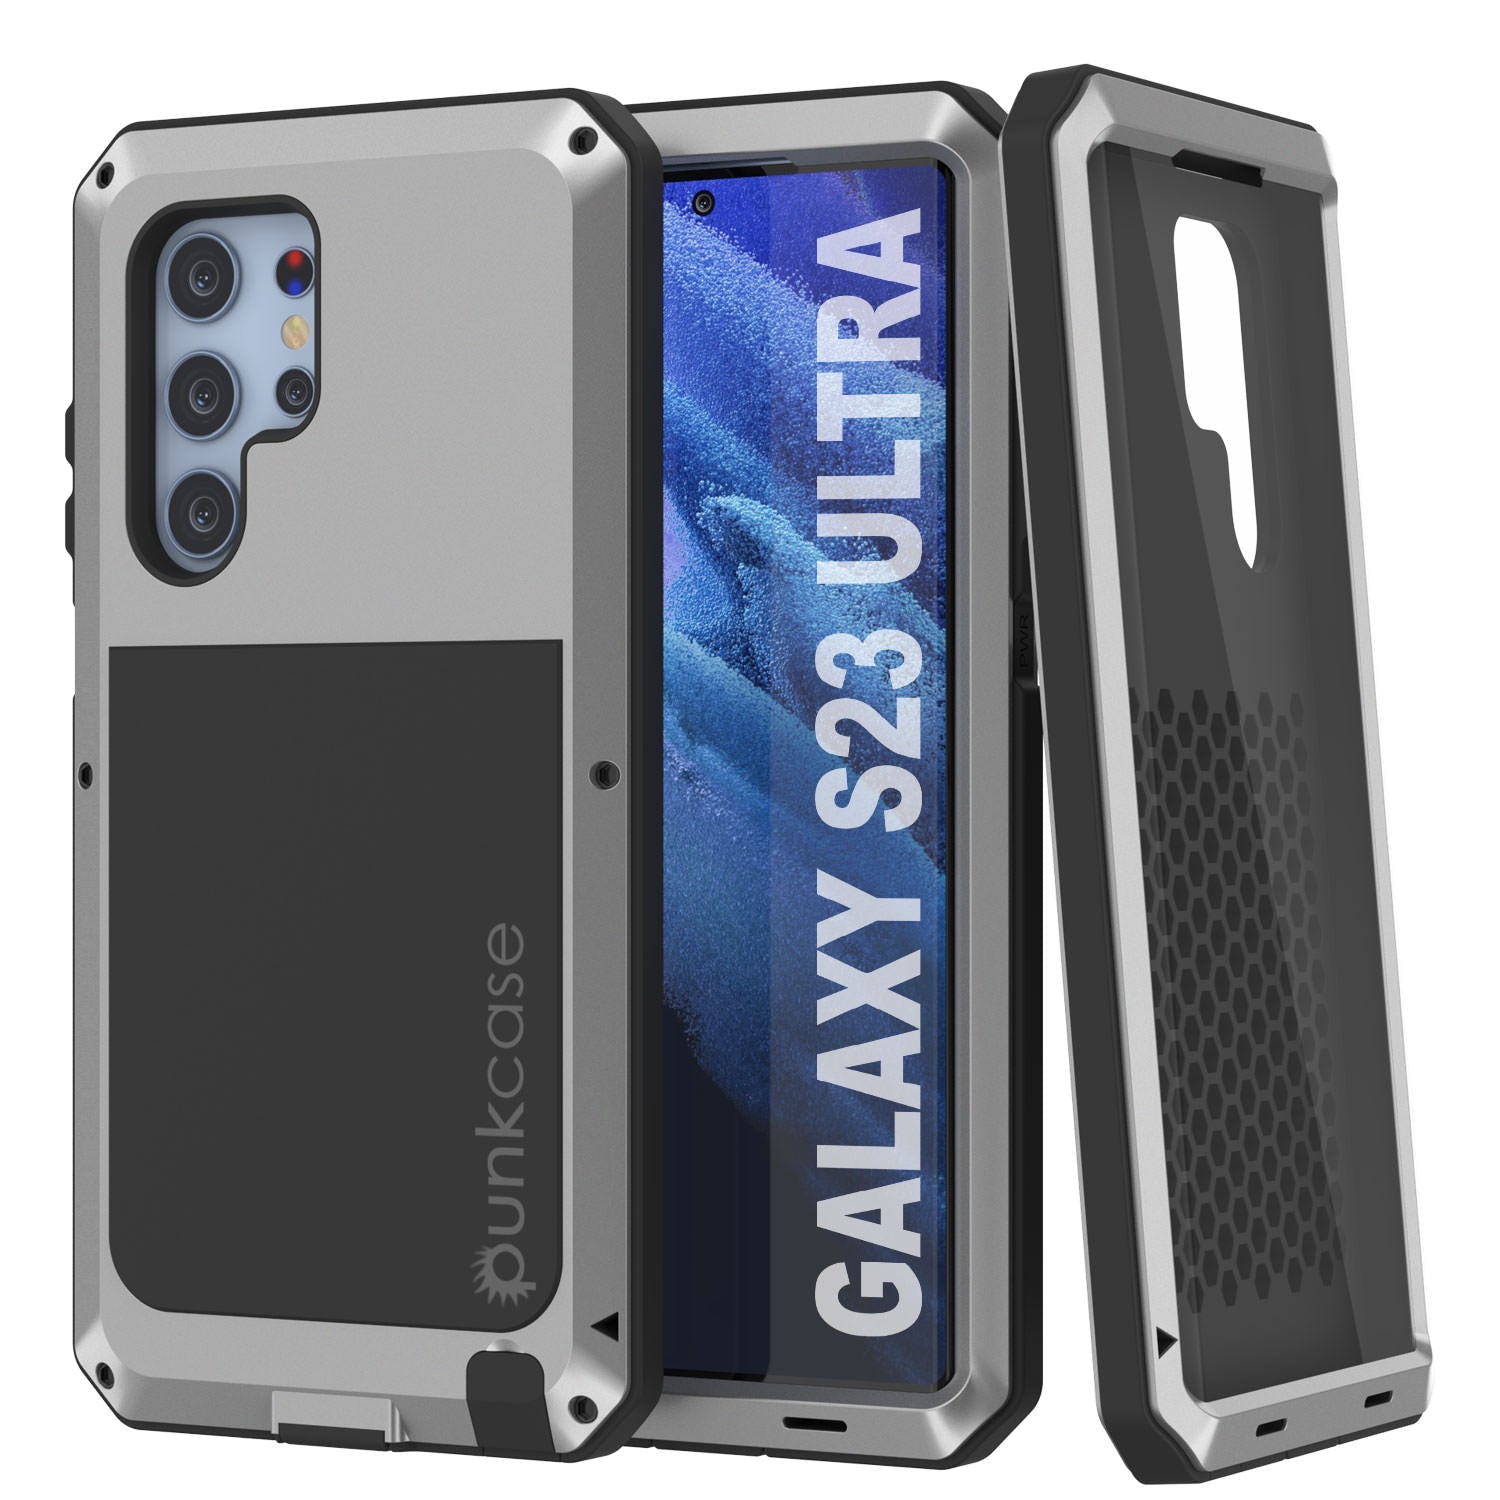 Galaxy S23 Ultra Metal Case, Heavy Duty Military Grade Armor Cover [shock proof] Full Body Hard [Silver]